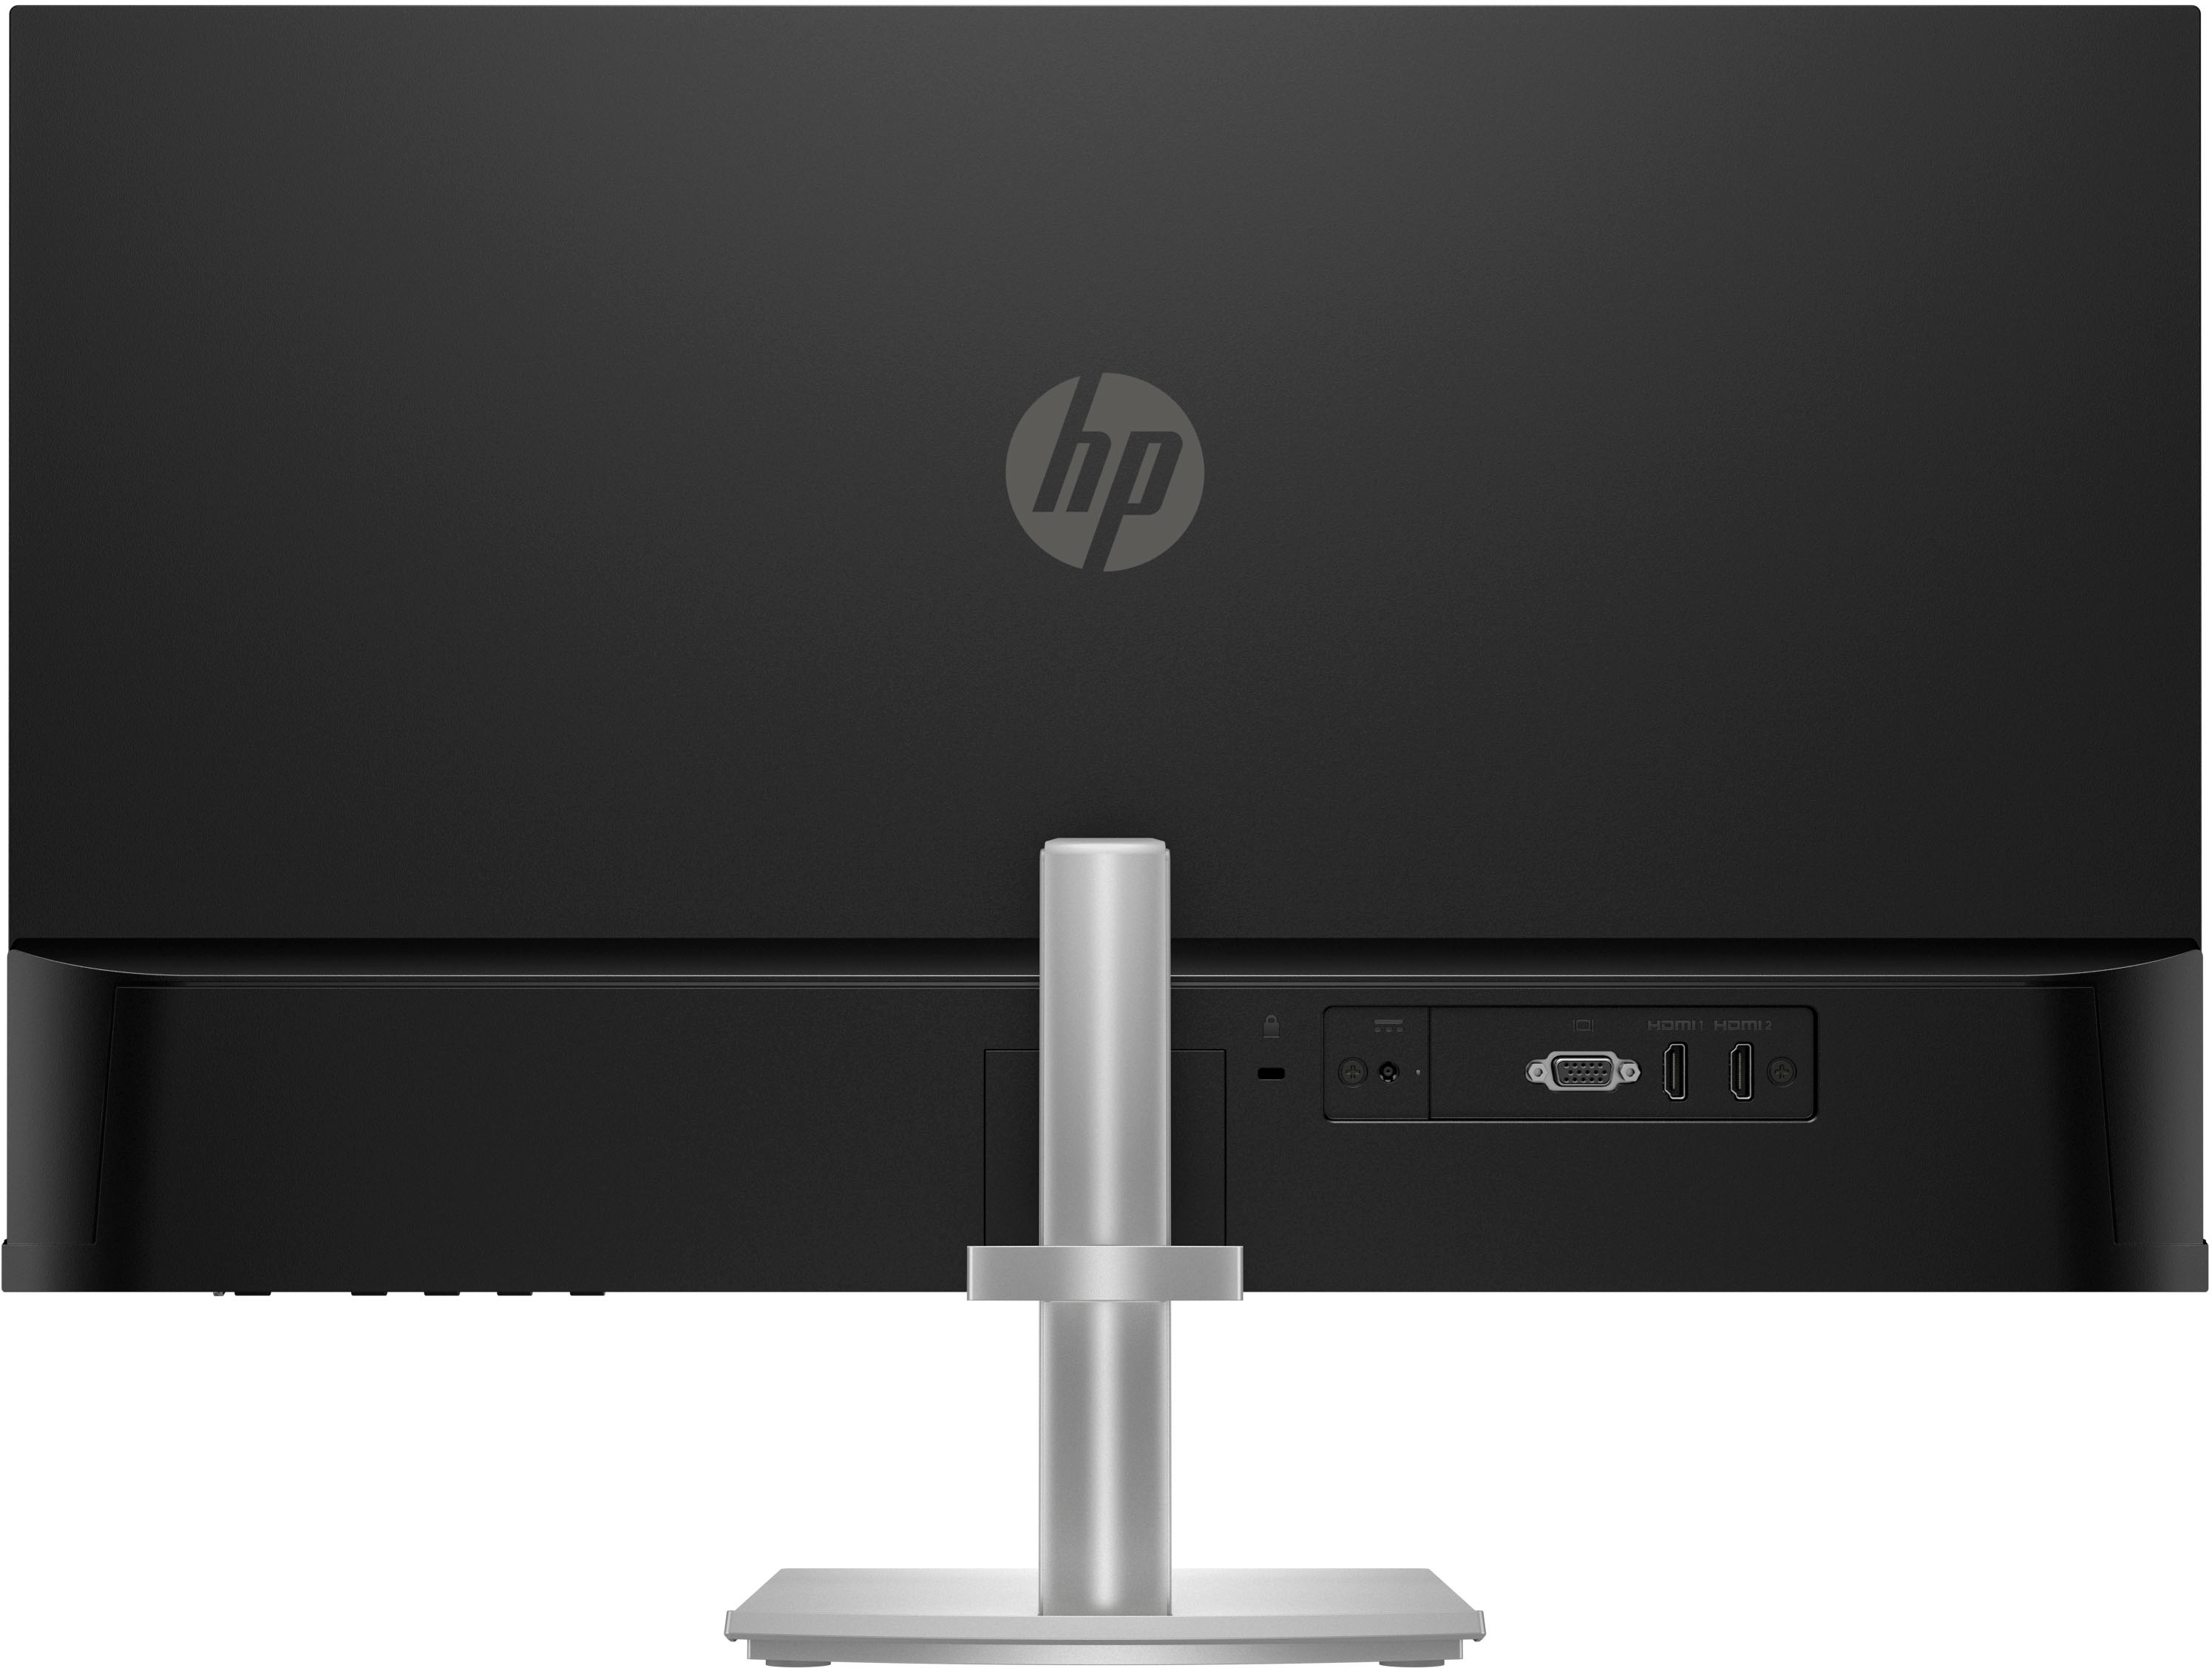 HP 27 Full HD IPS Computer Monitor, AMD FreeSync, (2 x HDMI, VGA) - M27fe